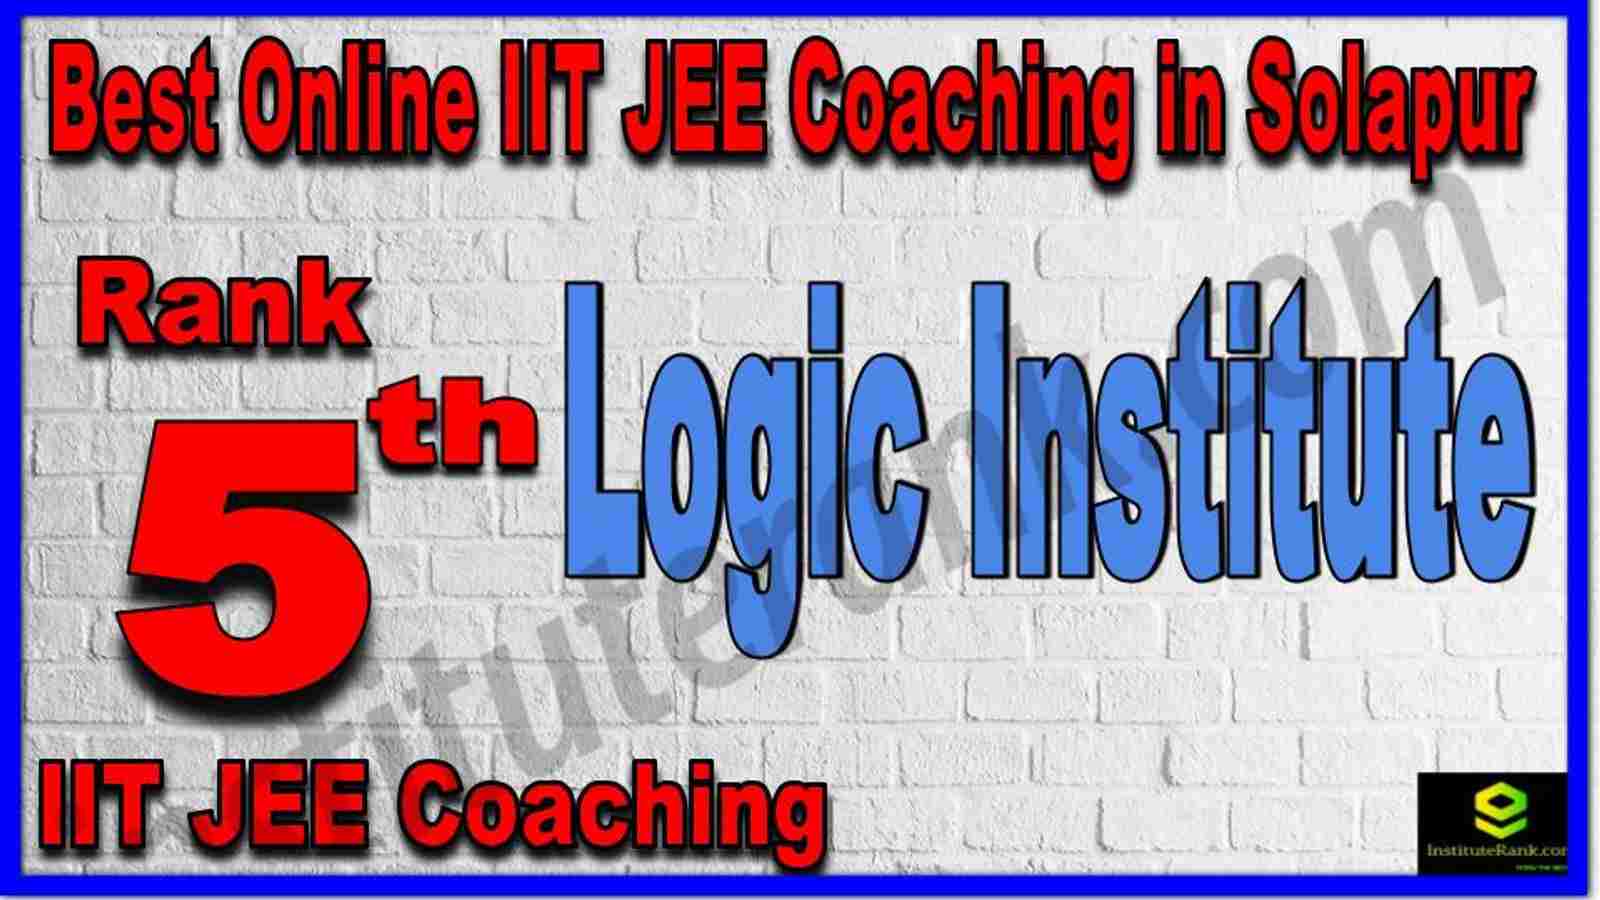 Rank 5th Best Online IIT JEE Coaching in Solapur